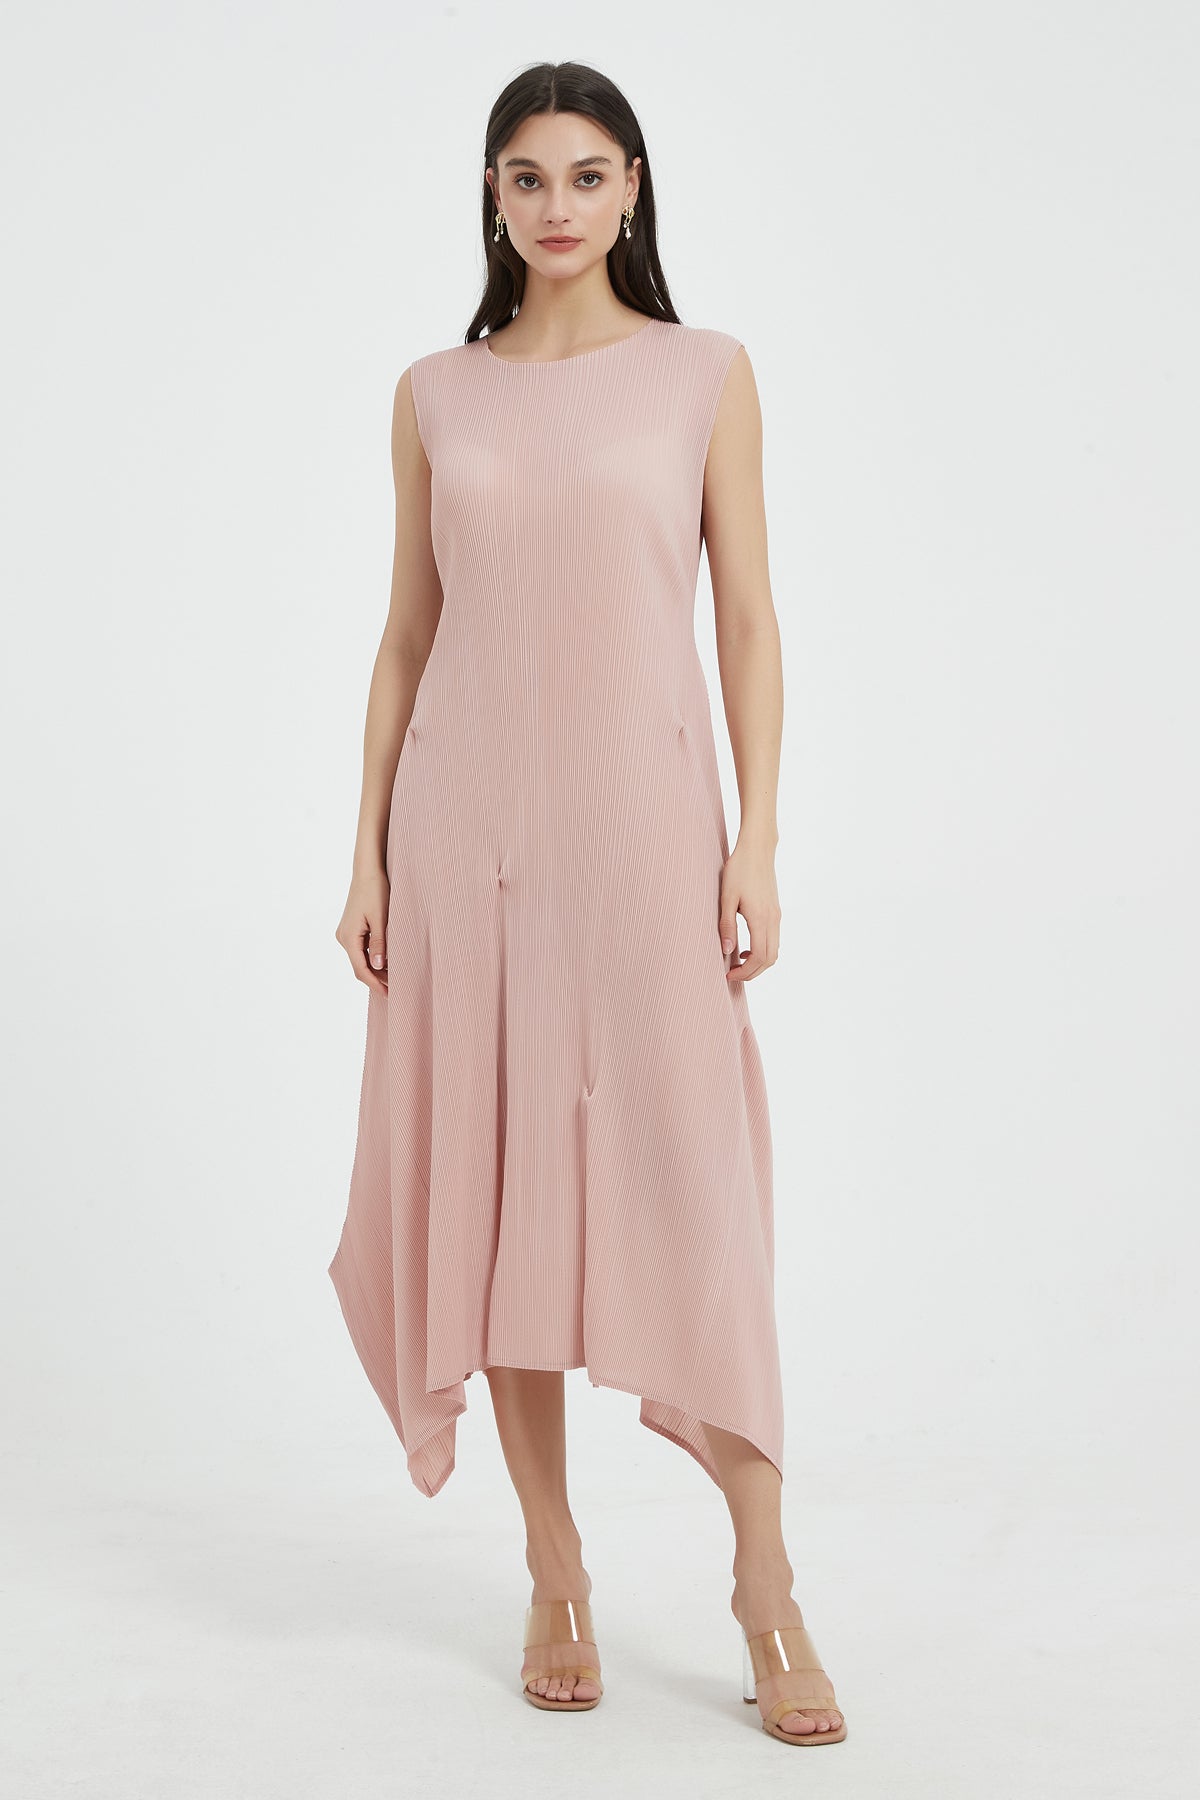 SKYE Katherine Asymmetric Hem Pleated Midi dress pink6